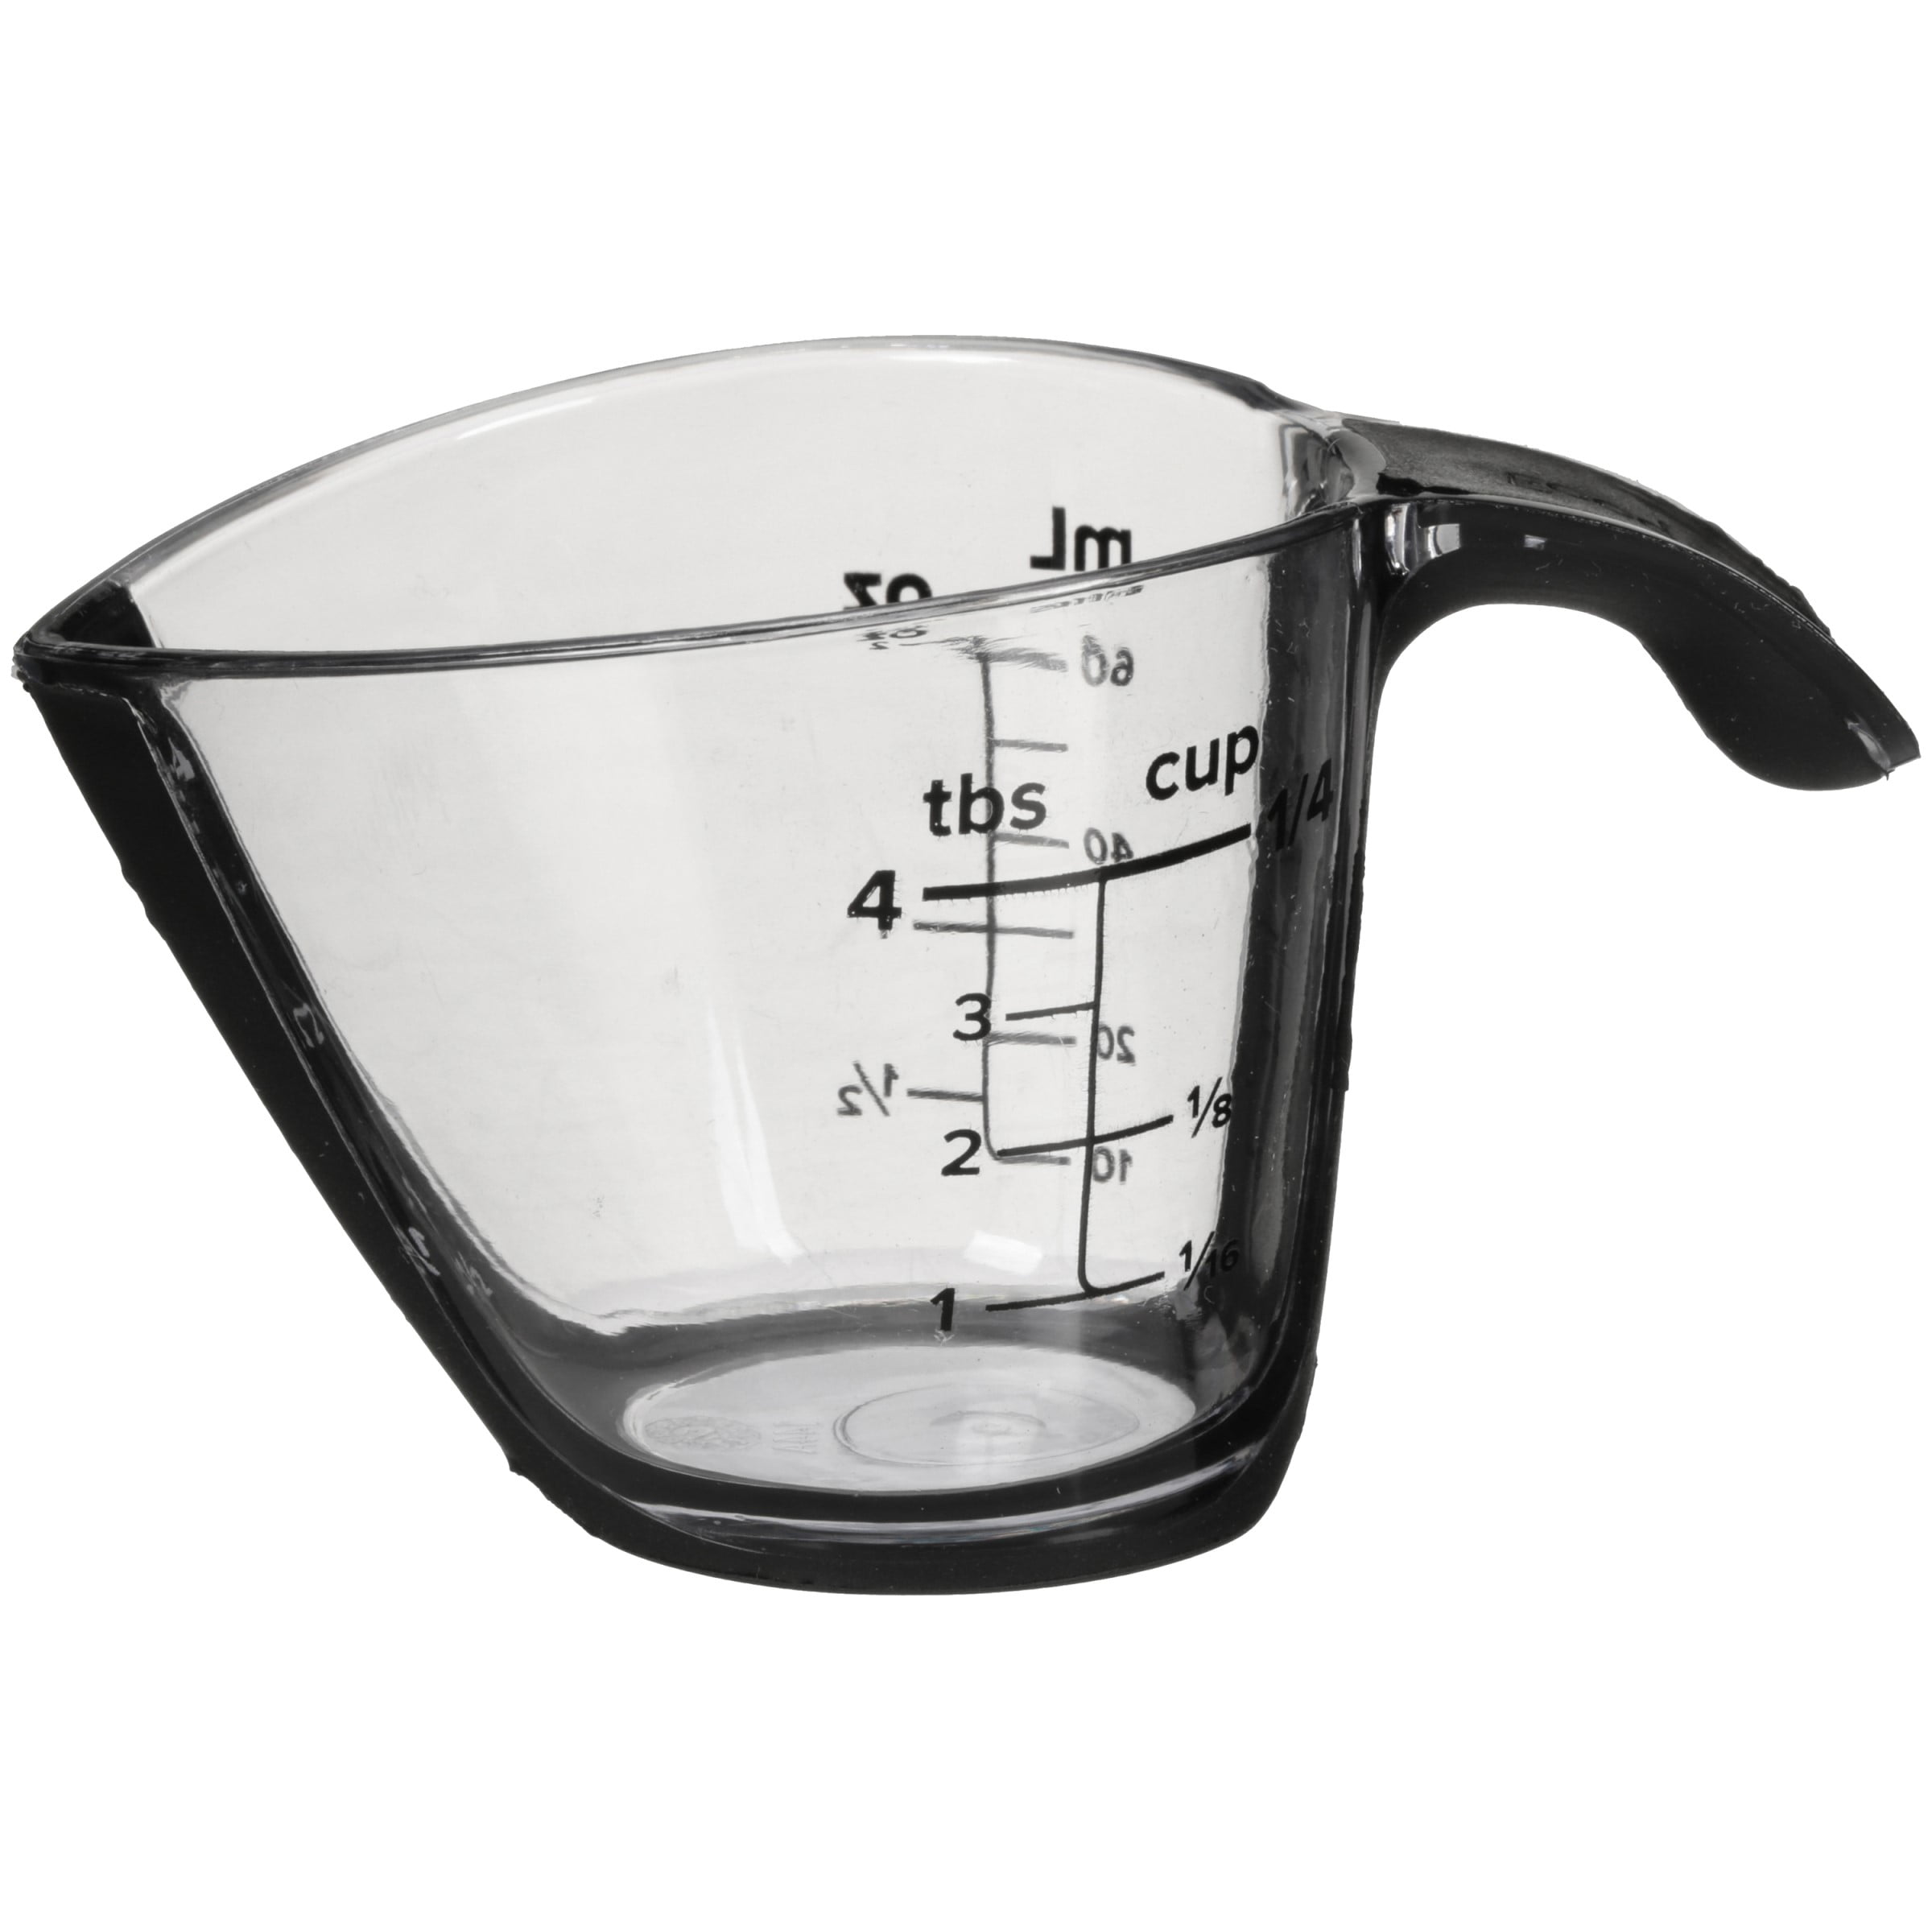 Measuring Cup Transparent Clear Measuring Cups Measuring Cup Kitchen Measuring Cup Plastic Measuring Jug Measuring Cup Set